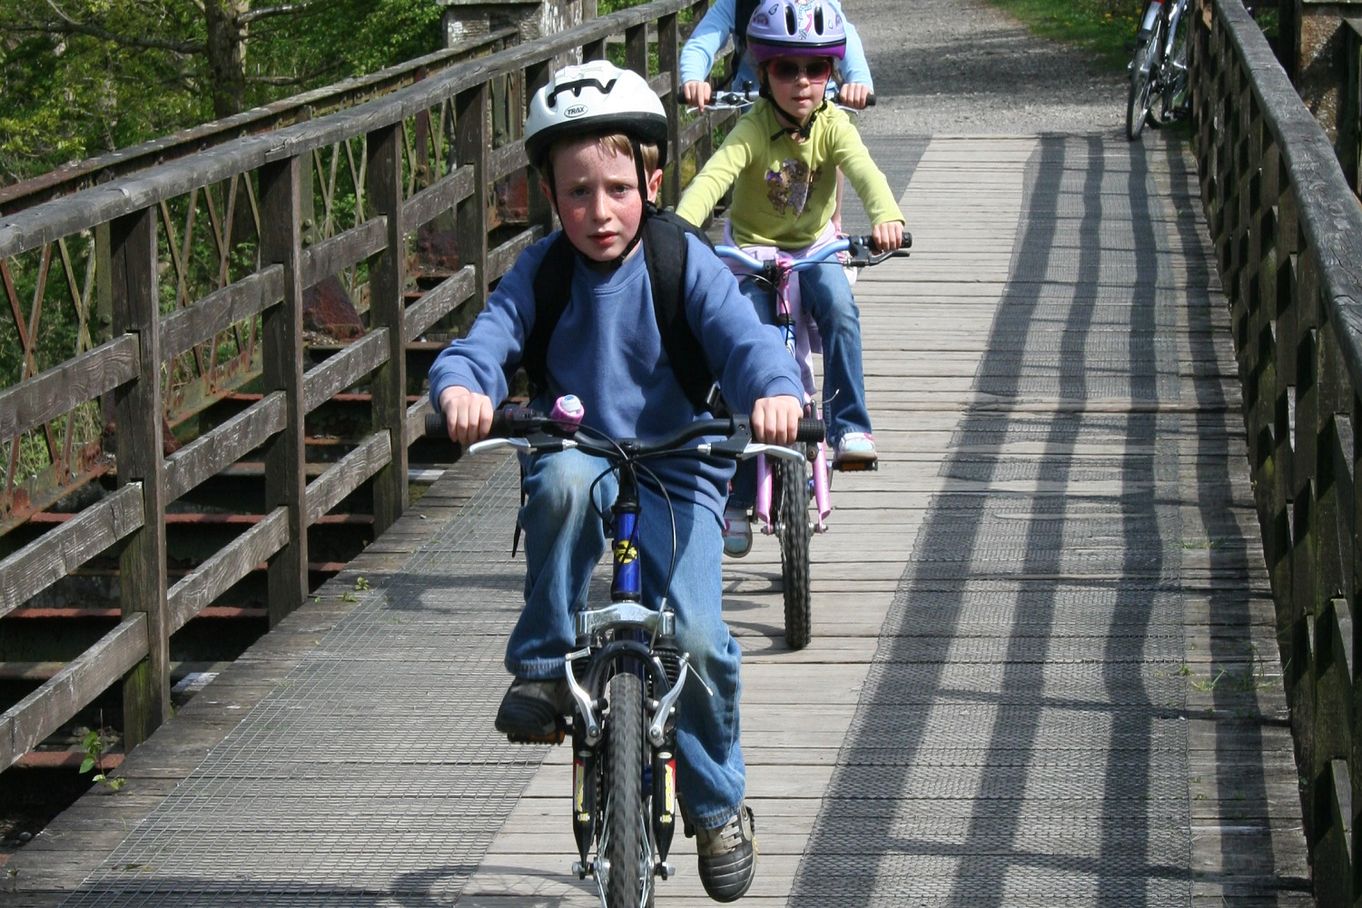 Keswick to Threlkeld cycling path